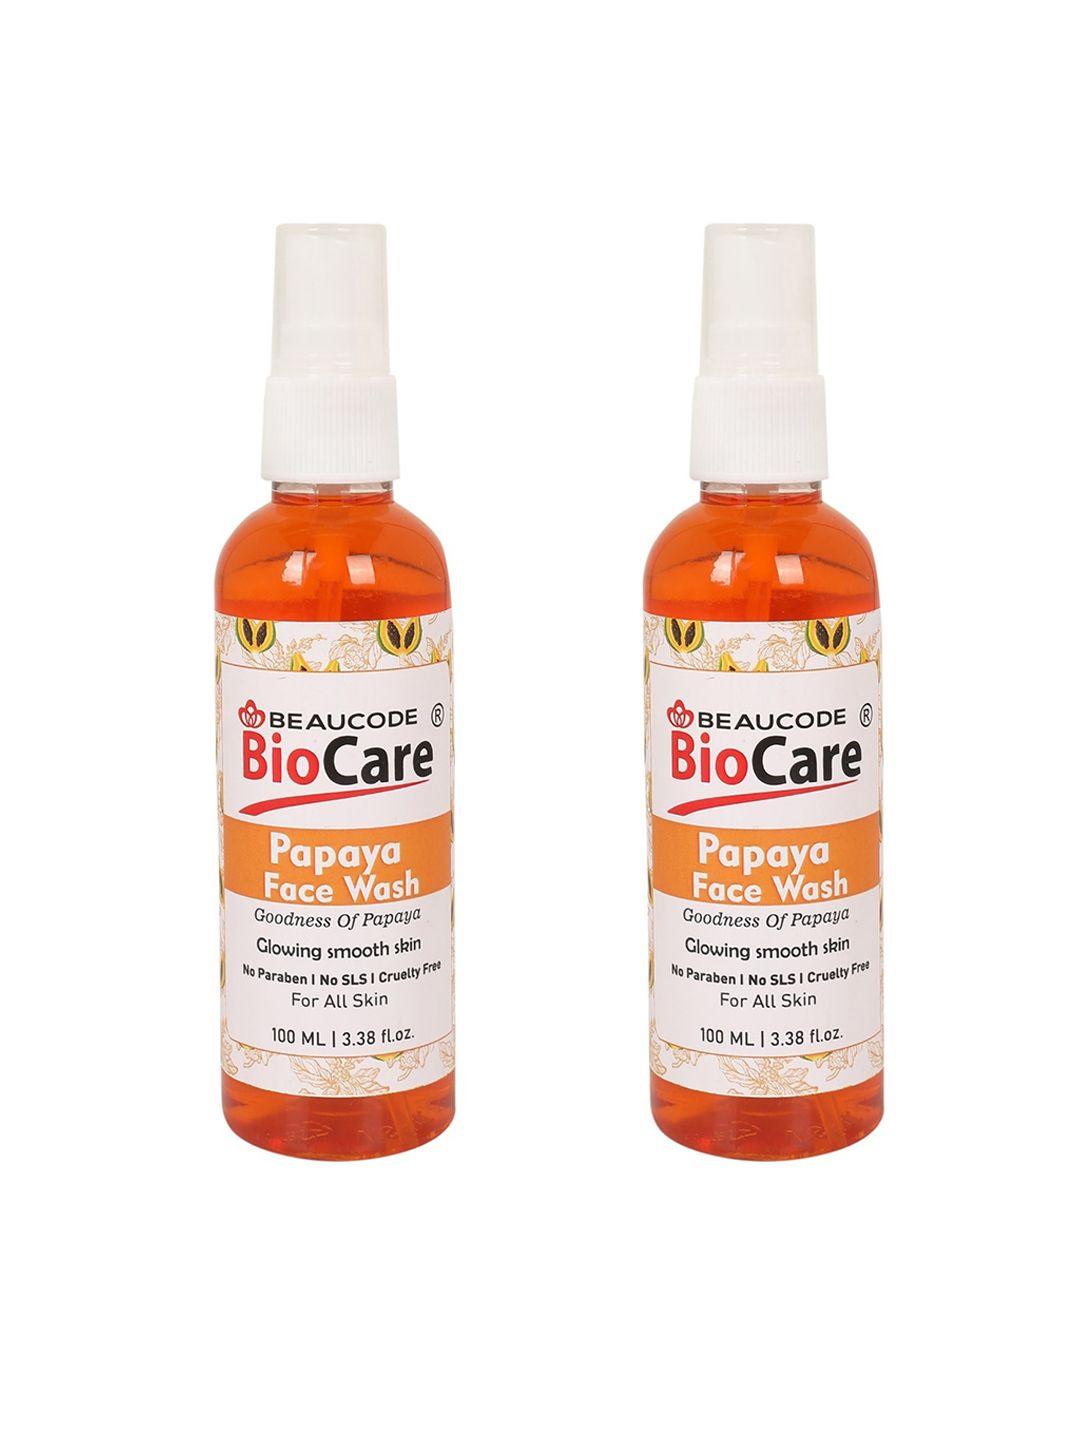 beaucode biocare set of 2 papaya face wash for glowing skin - 100 ml each